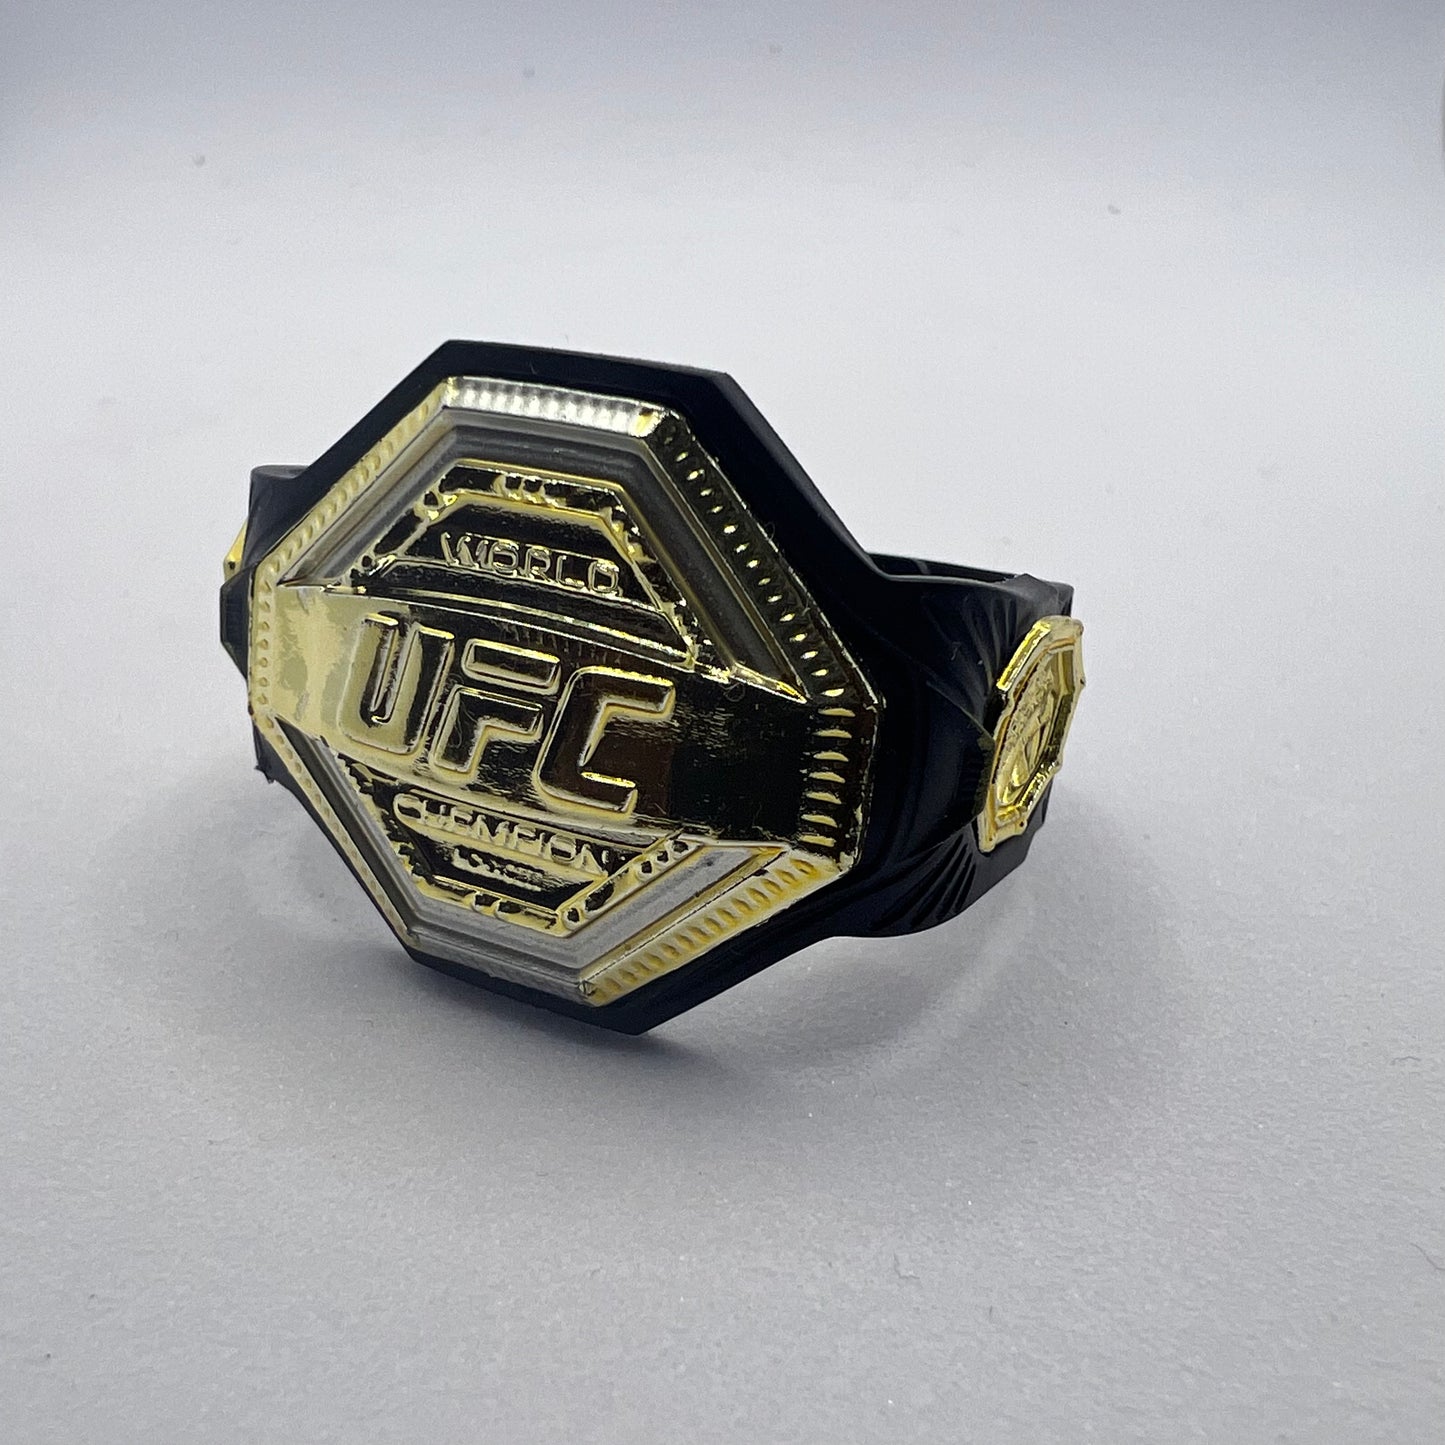 UFC World Championship - UFC Action Figure Toy Belt for Action Figure